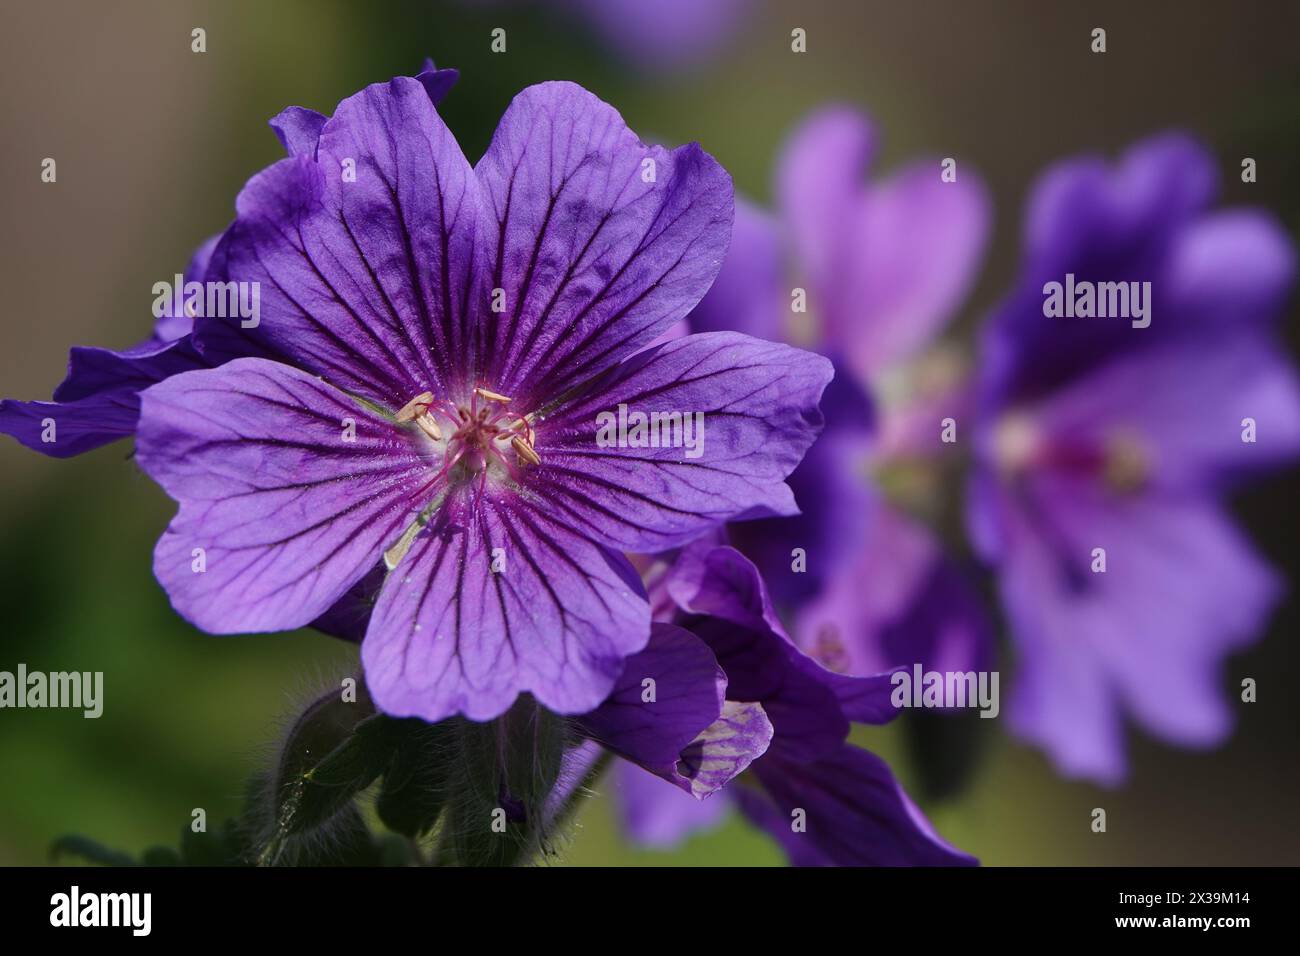 UK Sommer, lila Kranschnabel (Geranium) Blumen Stockfoto